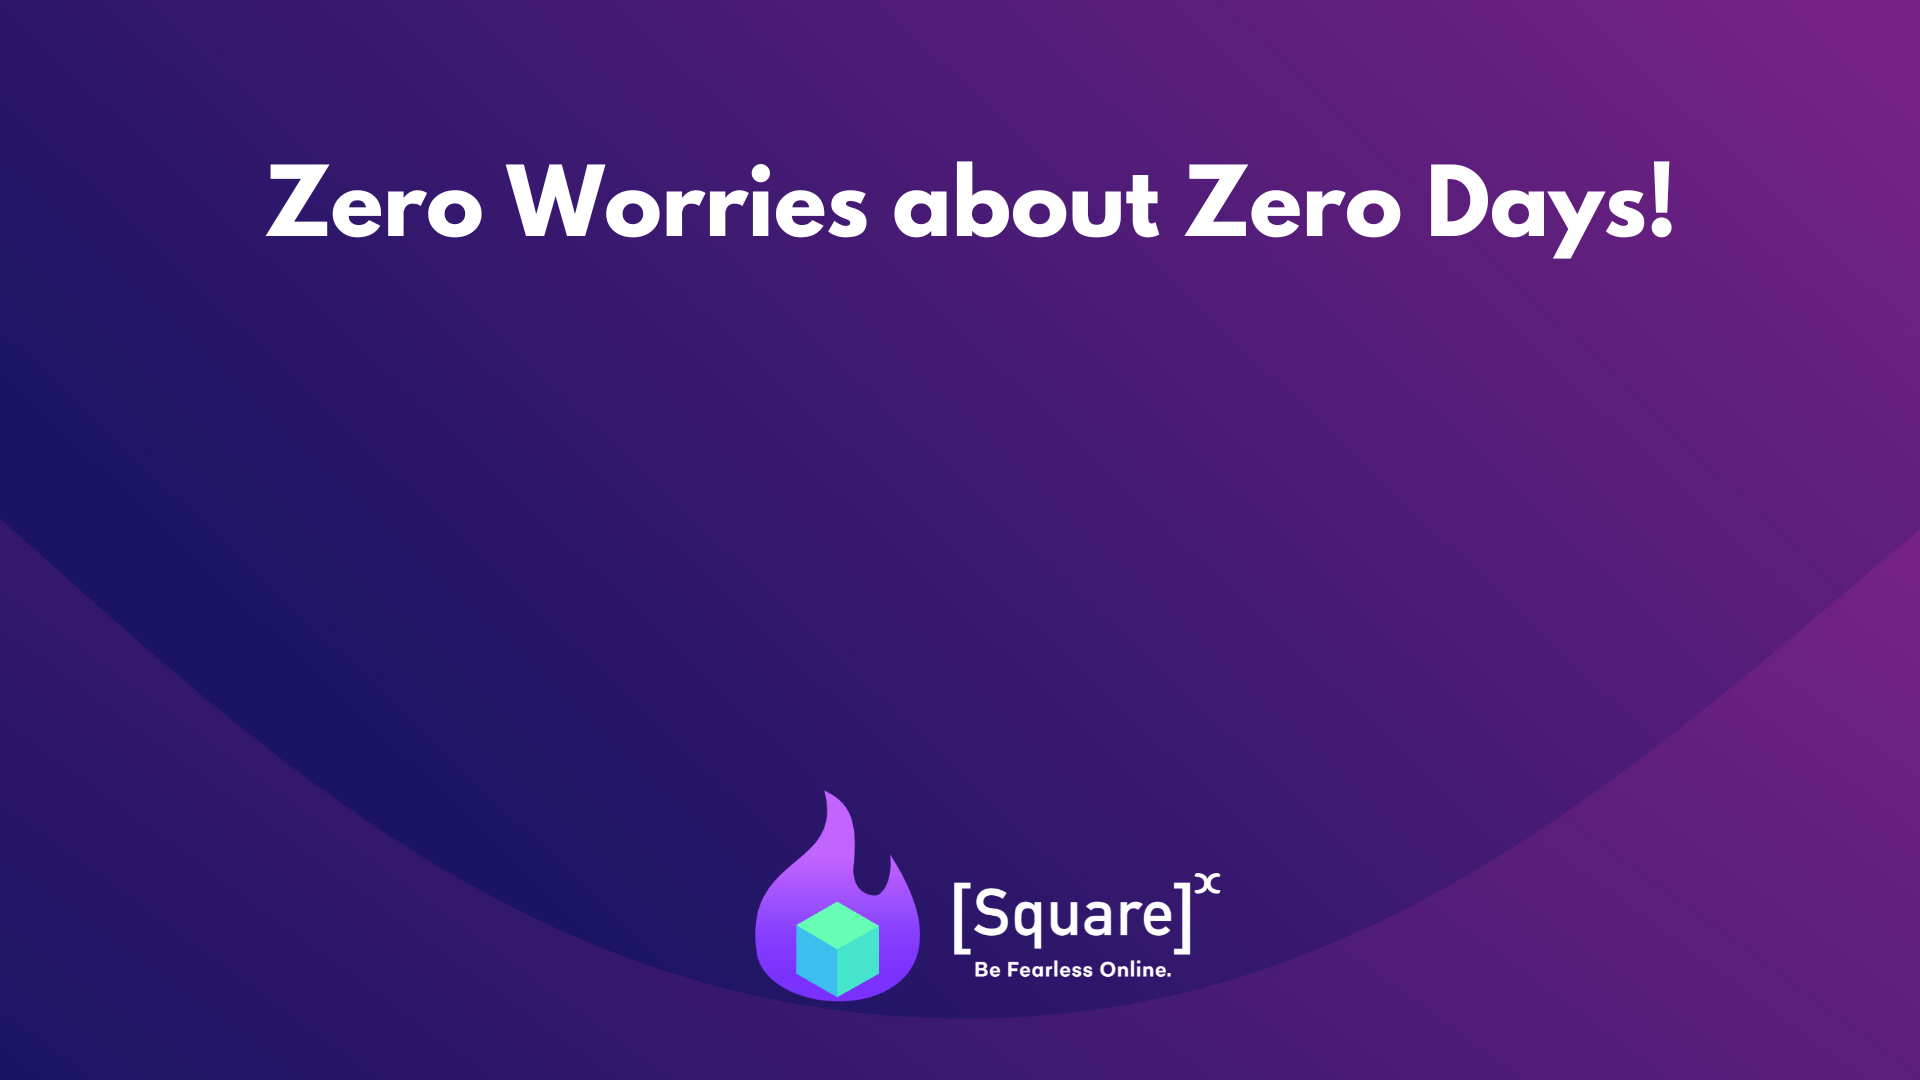 Zero worries about Zero Days!